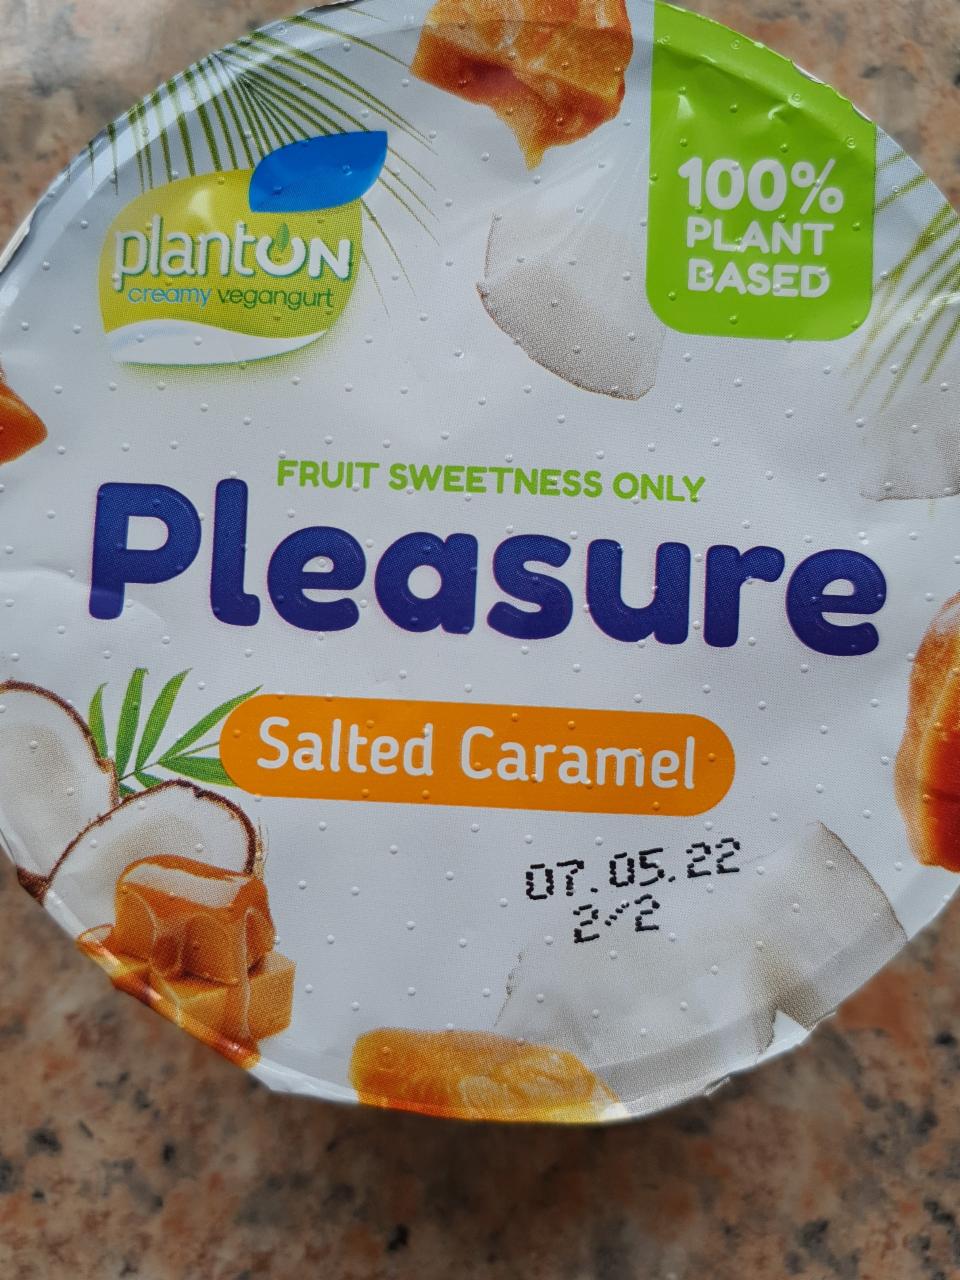 Fotografie - Pleasure salted caramel Planton